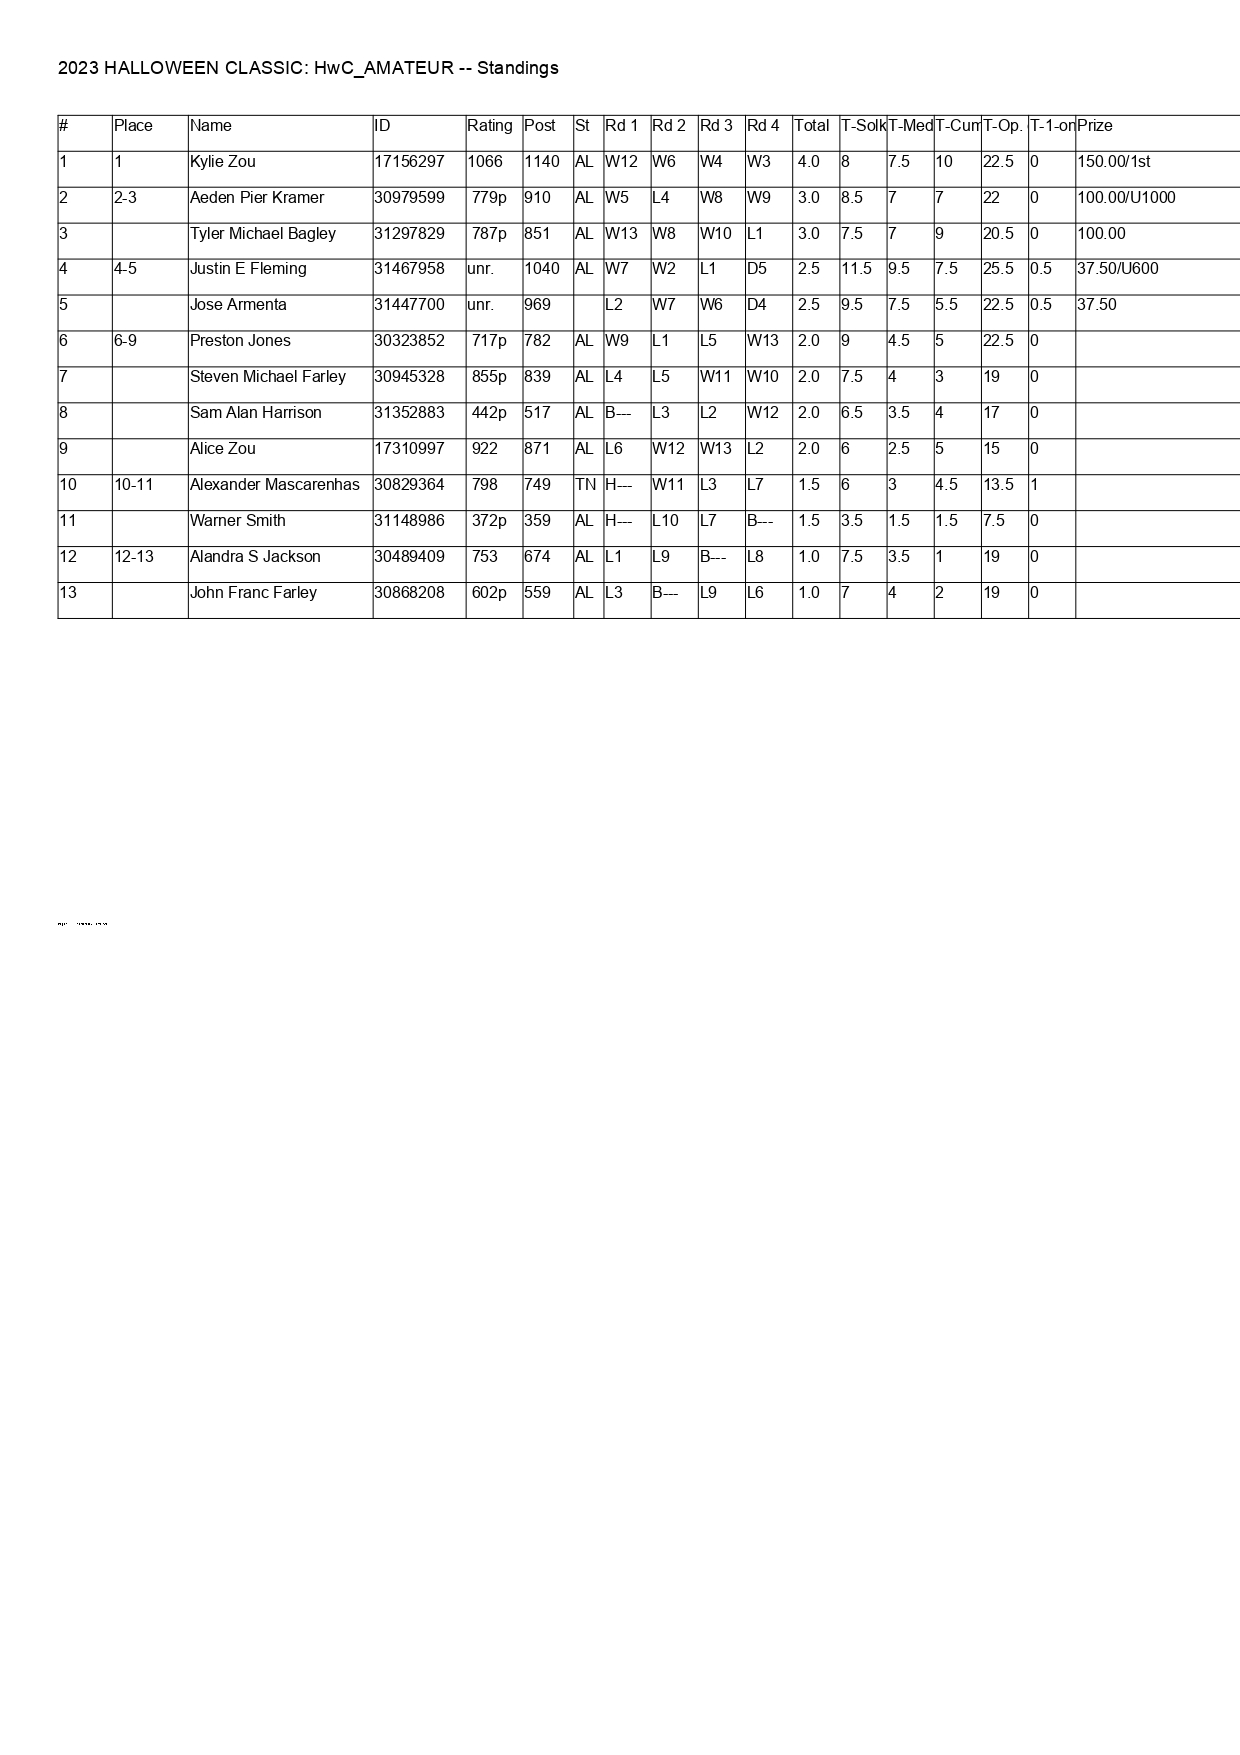 HwC_AMATEUR Standings Rd 4_page-0001